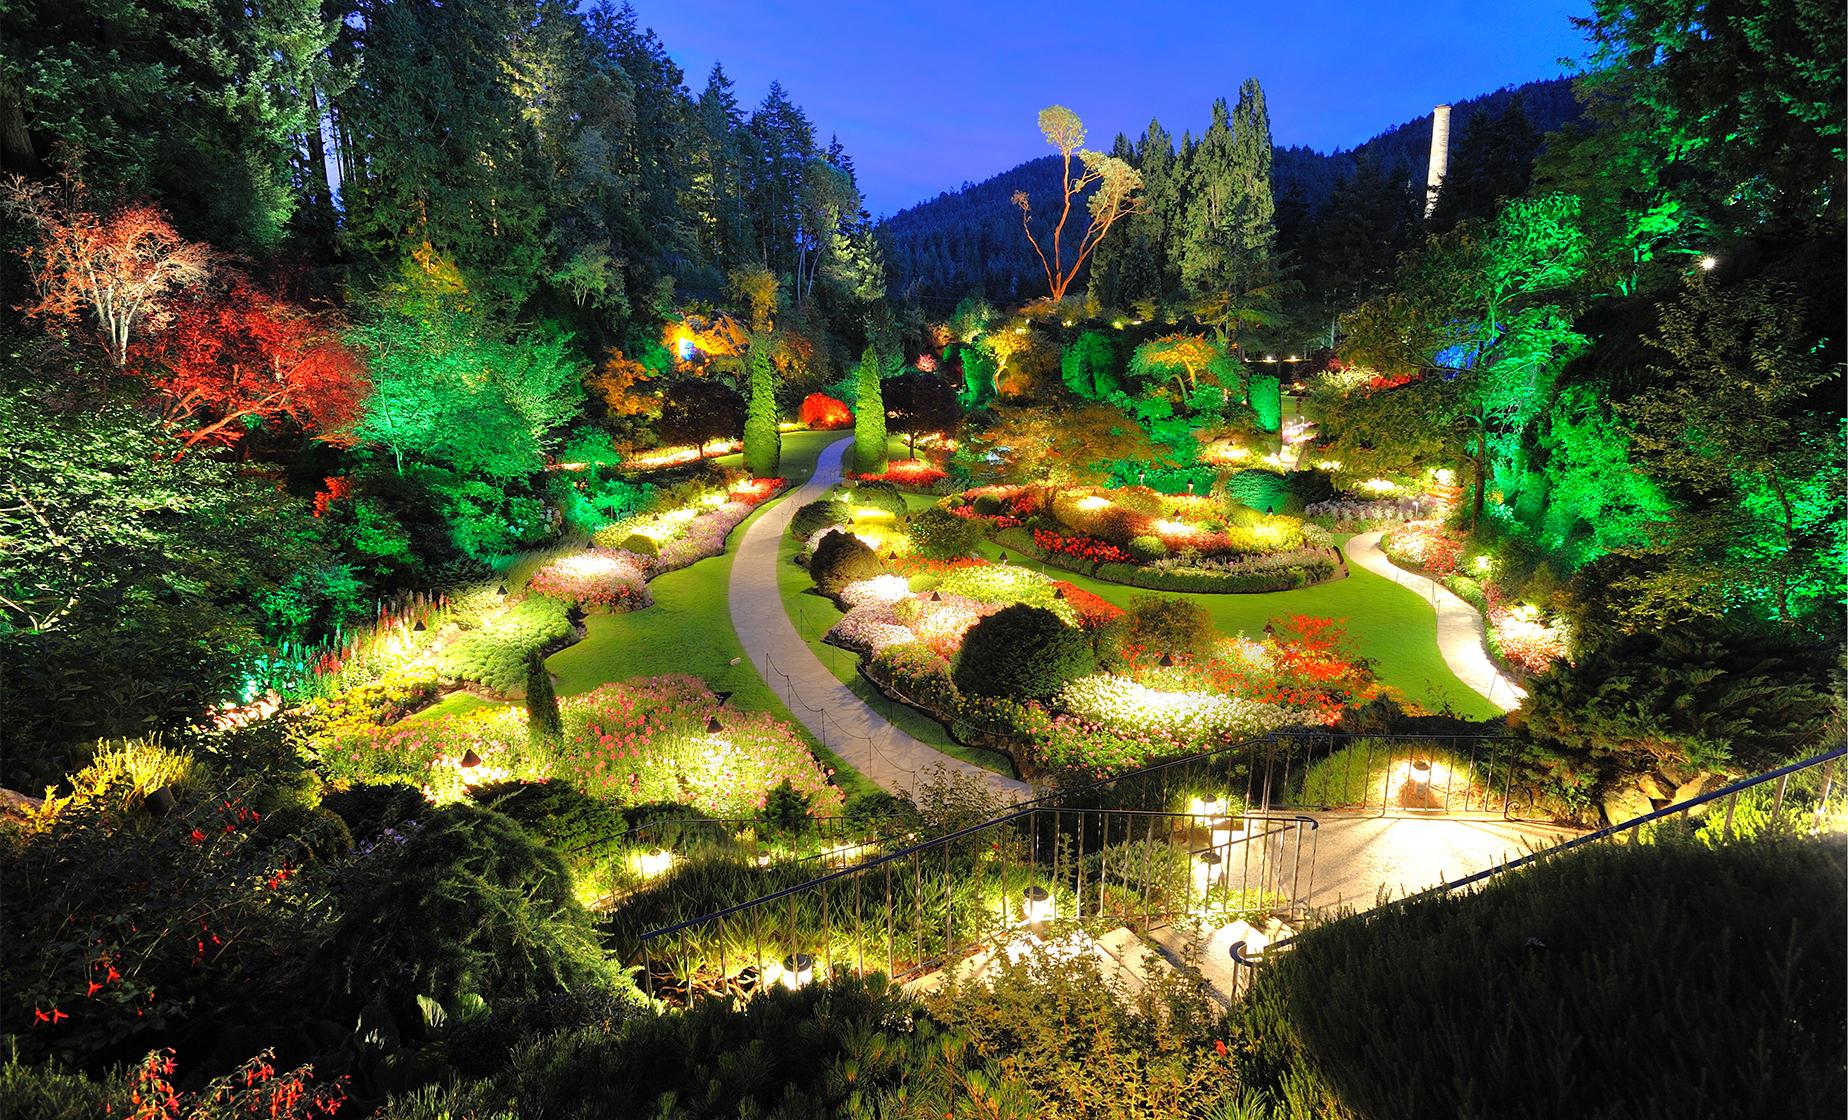 Butchart Gardens Illumination Cruise Excursion in Victoria, BC